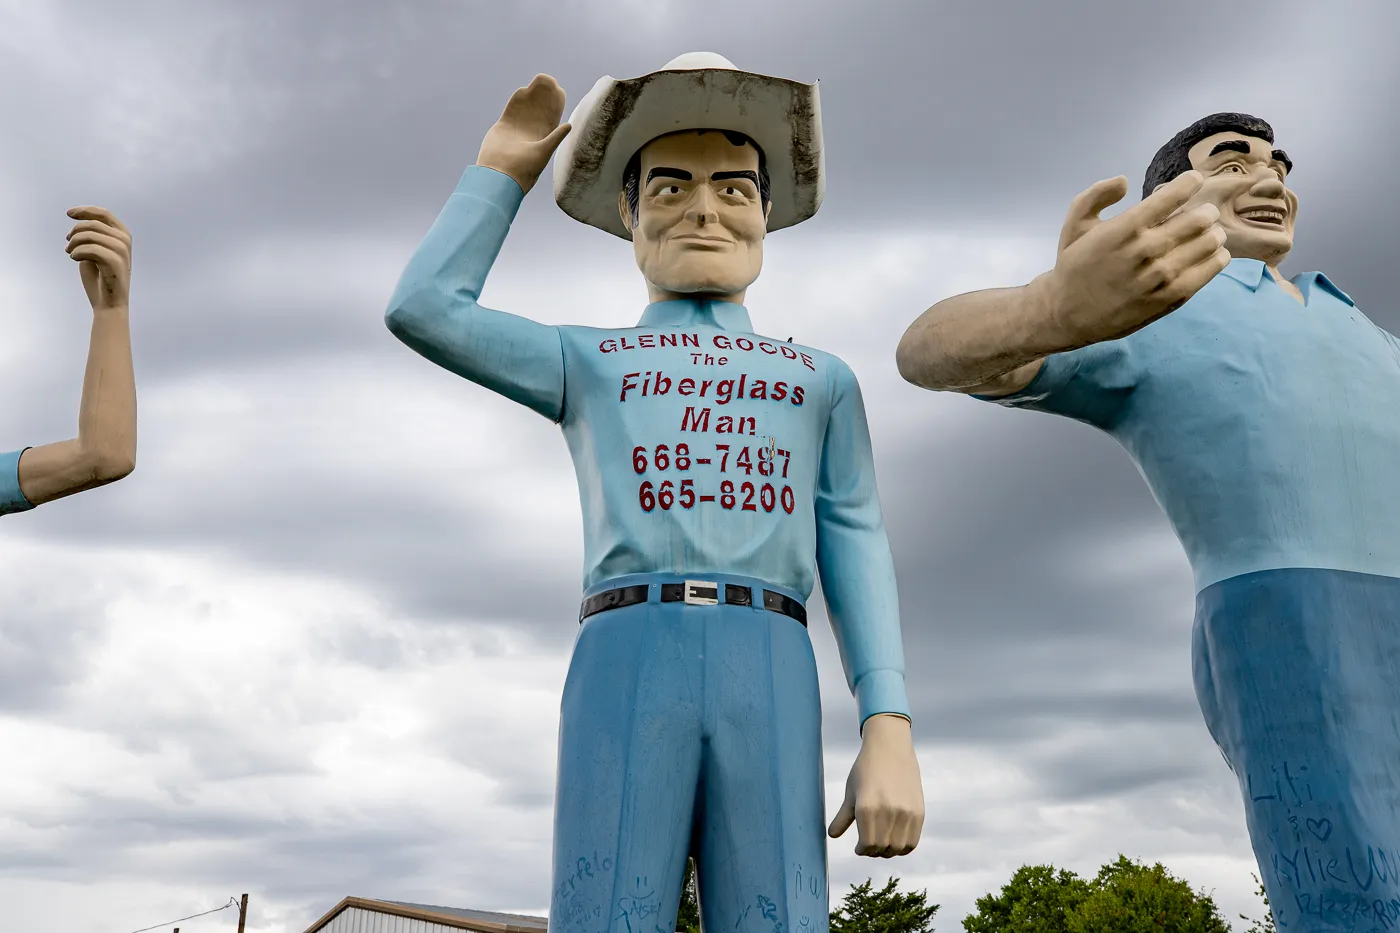 Cowboy Muffler Man at Glenn Goode's Big People in Gainesville, Texas Roadside Attraction